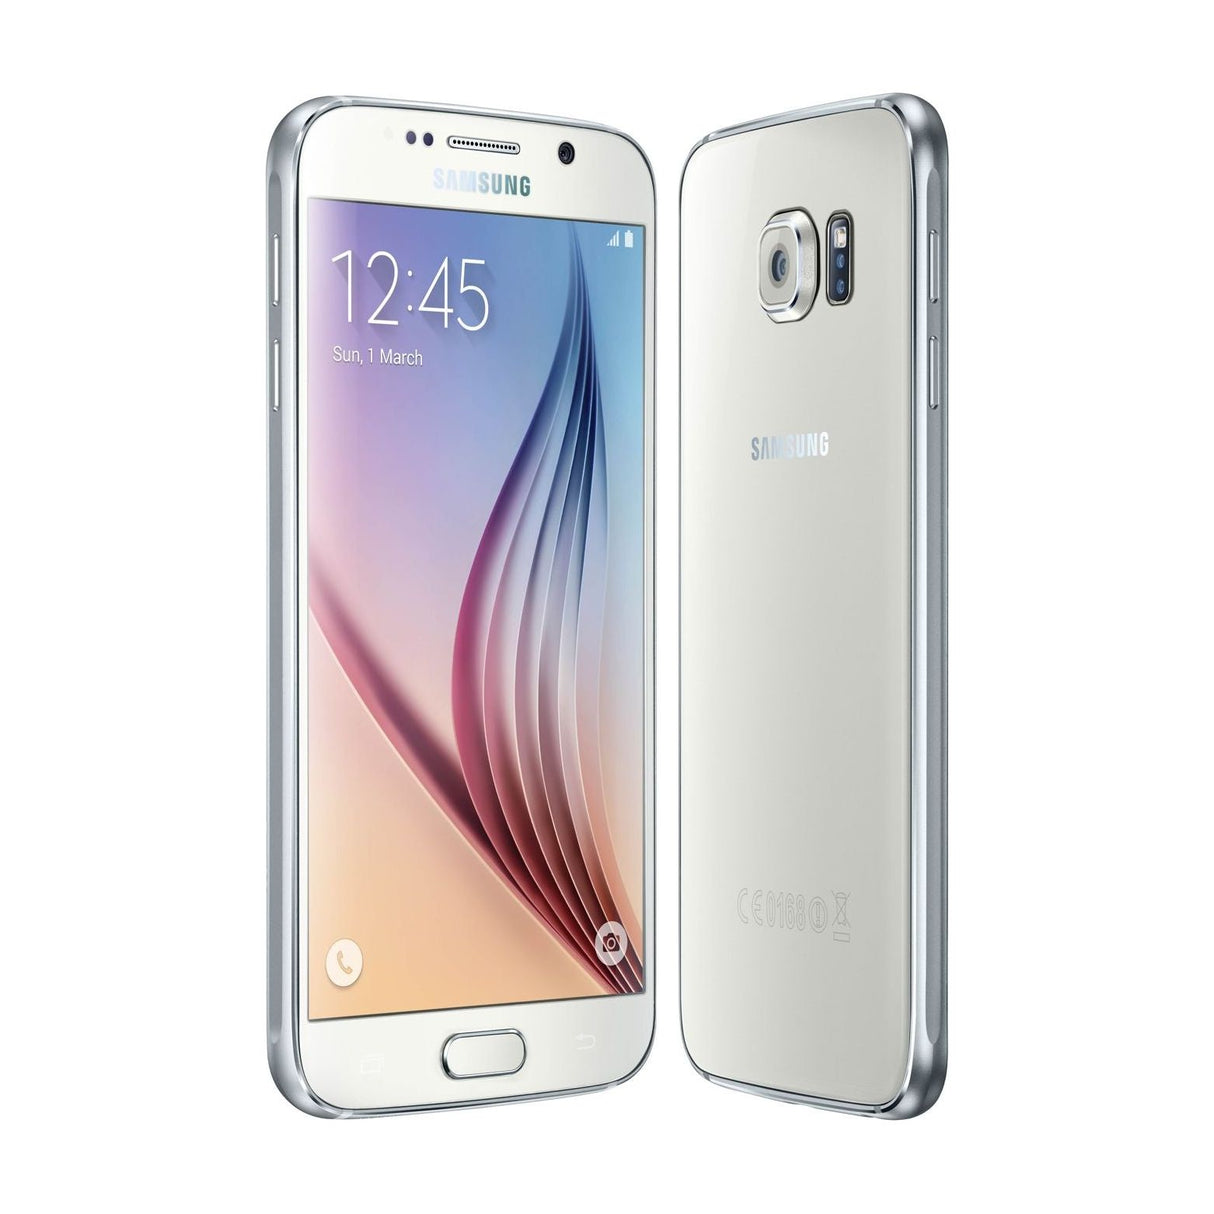 Samsung Galaxy S6 - 128 GB - White Pearl - Verizon - CDMA/GSM